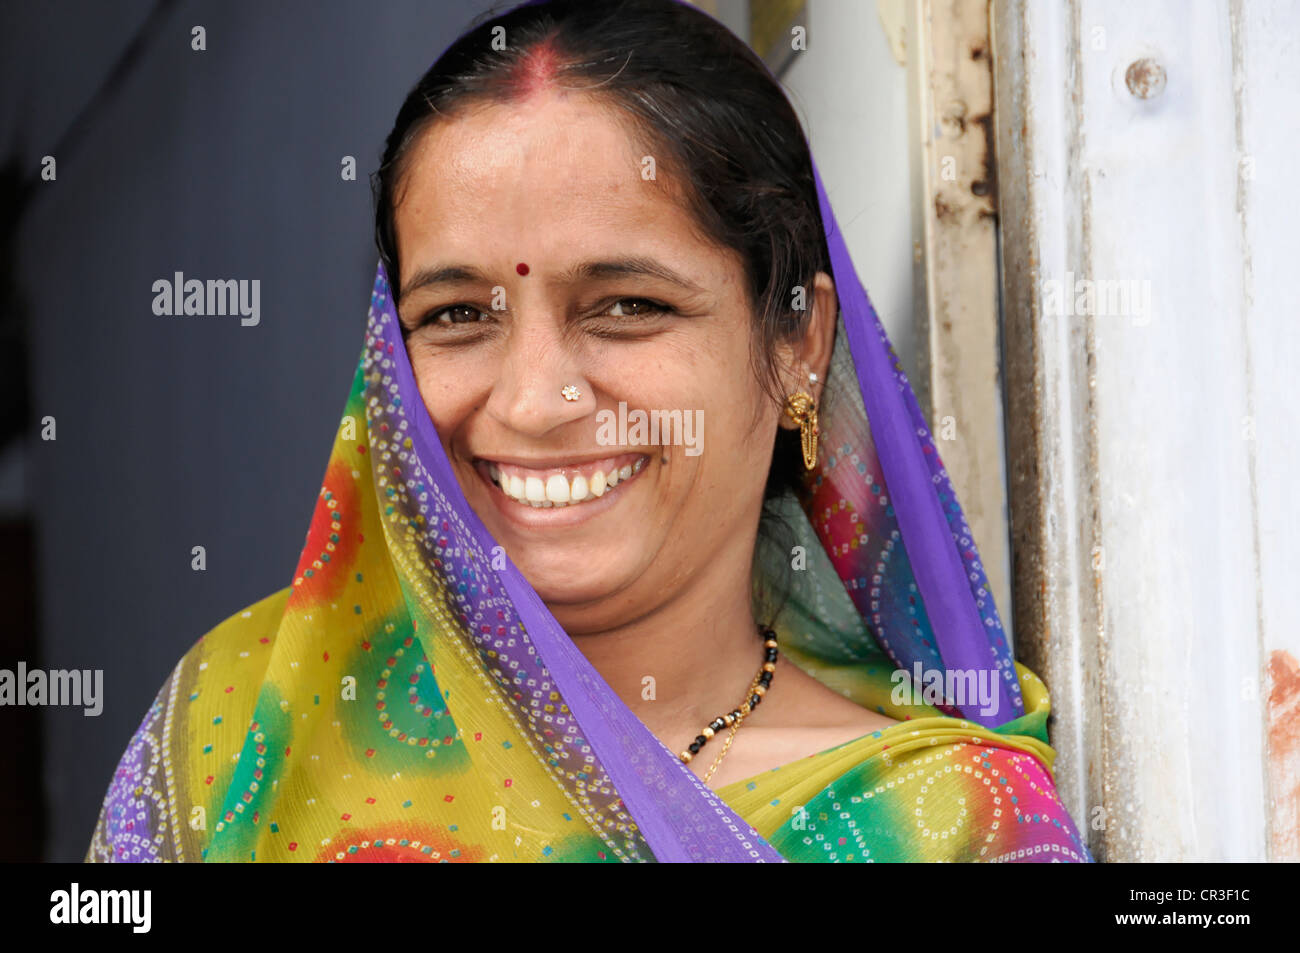 Jeune femme indienne, portrait, Jaipur, Rajasthan, Inde du nord, l'Asie Banque D'Images